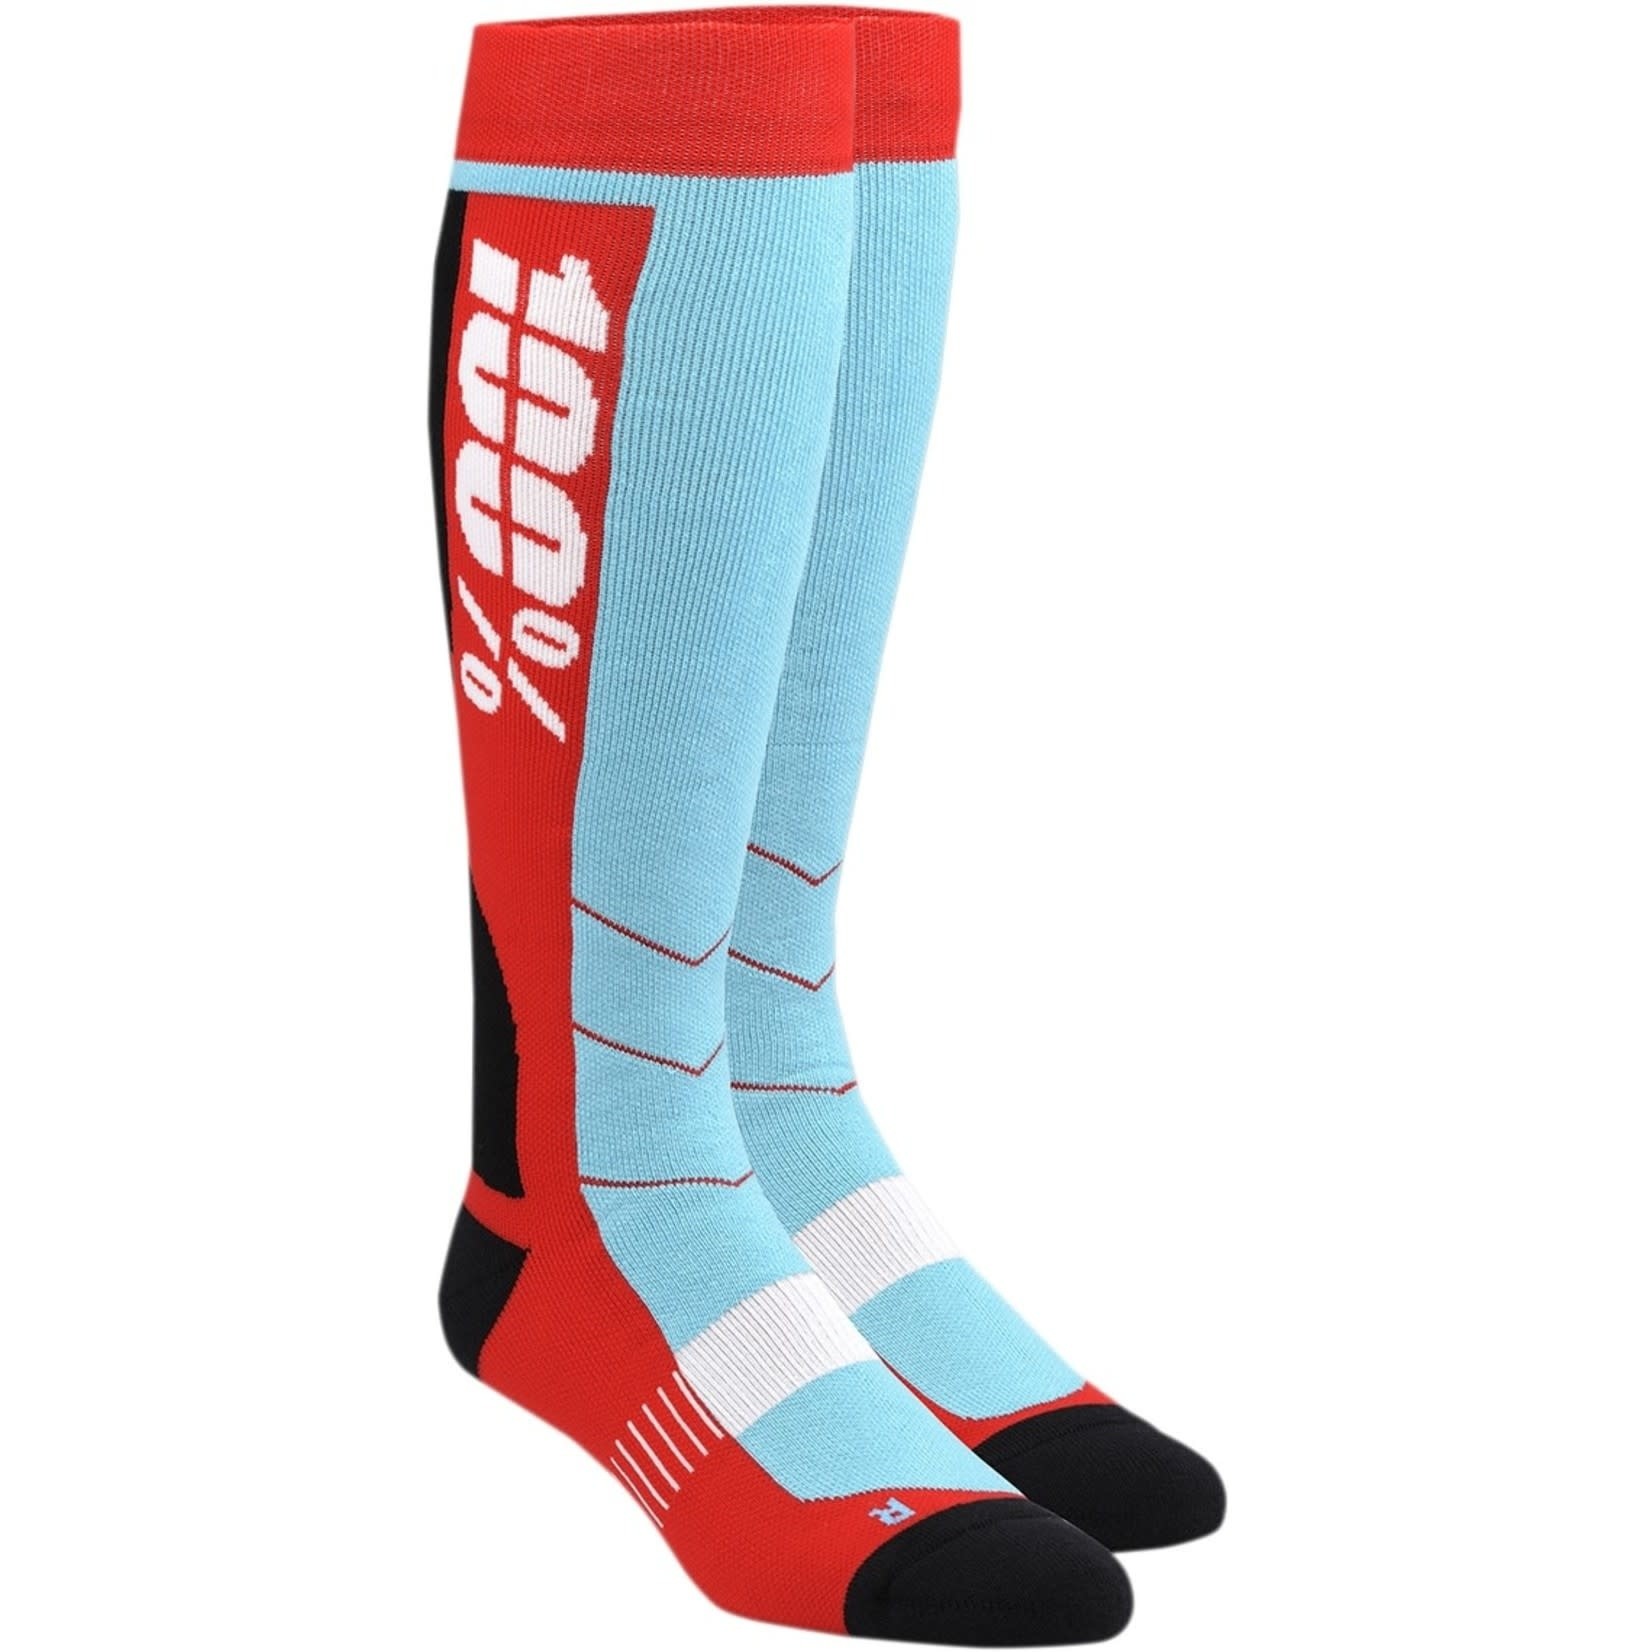 100% HI-SIDE Performance Socks, Red